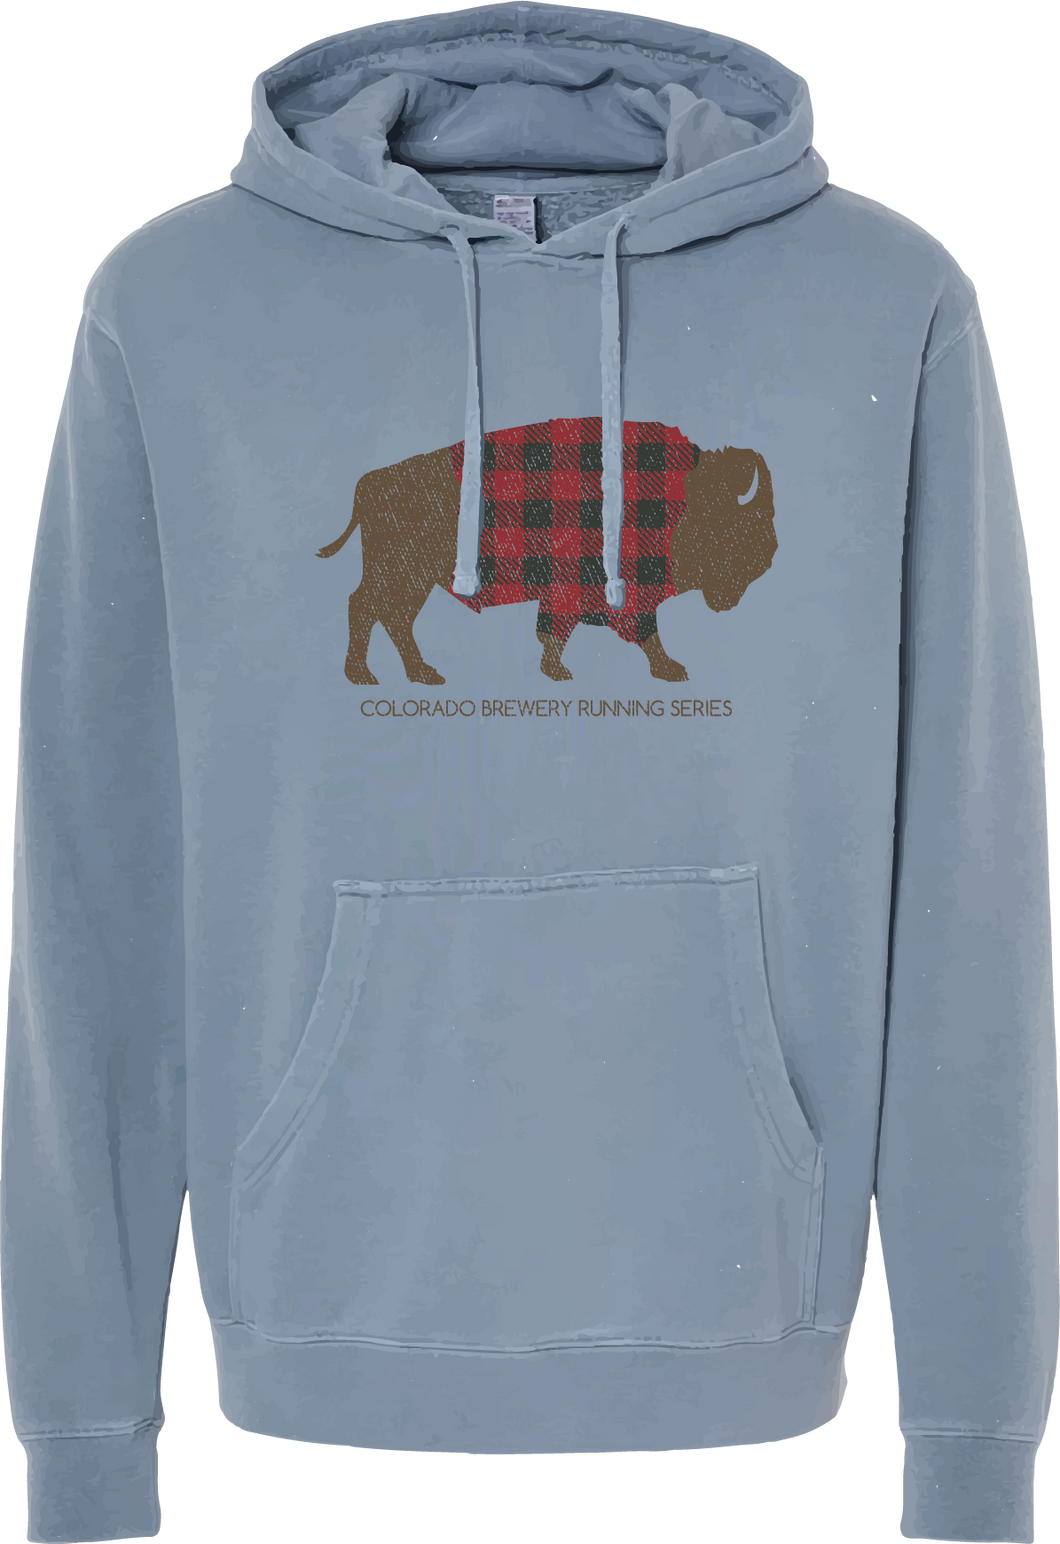 Buffalo Plaid Bison - Unisex Pullover Hoodie - Slate Blue